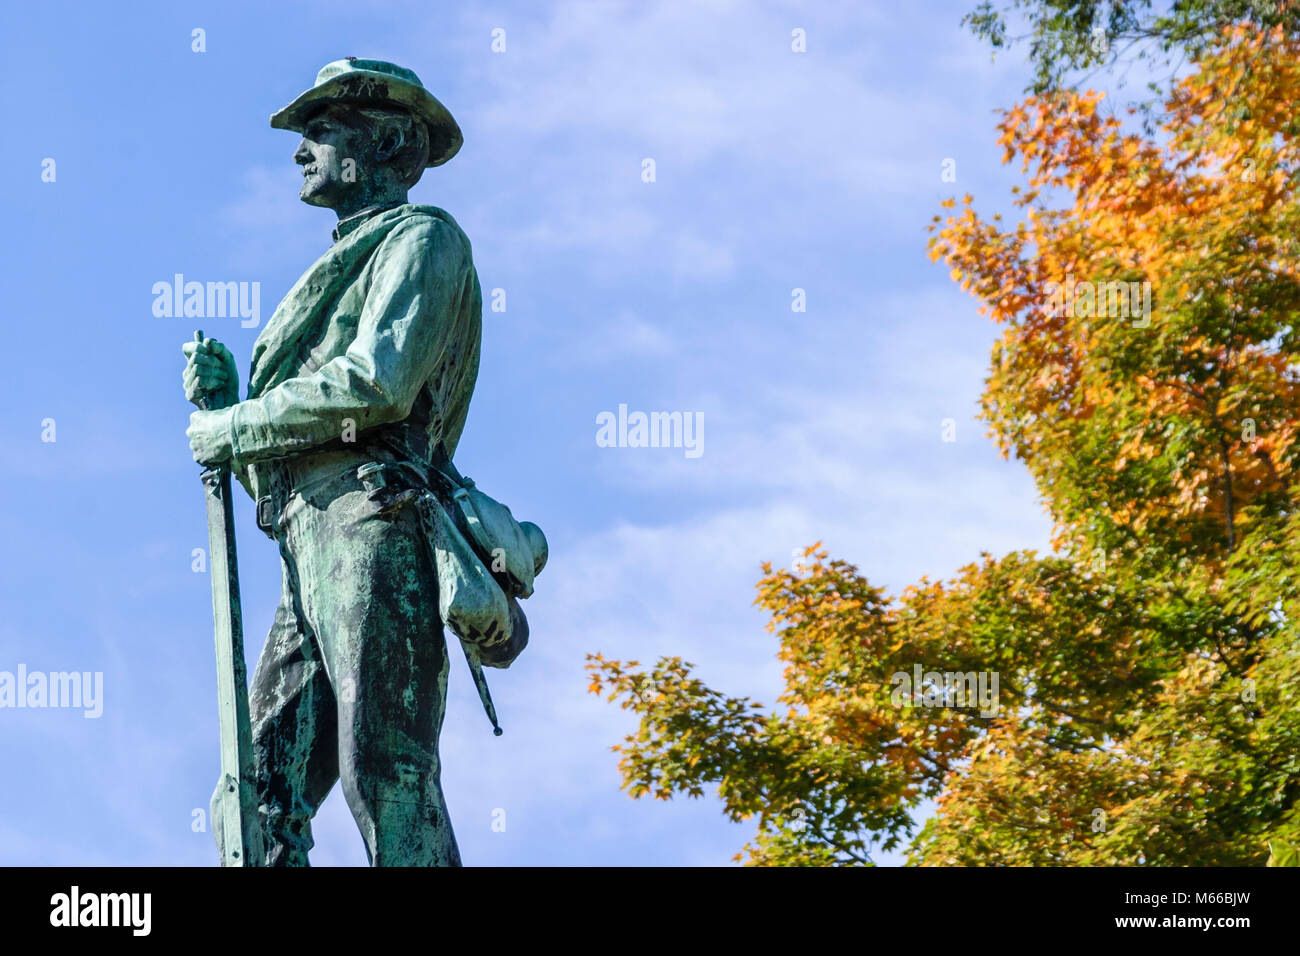 West Virginia Greenbrier County,Lewisburg,Washington Street,Confederate Soldier statue,public art,sculpture,Guerre civile,Union,Blue,Grey,Memorial,Fall Co Banque D'Images